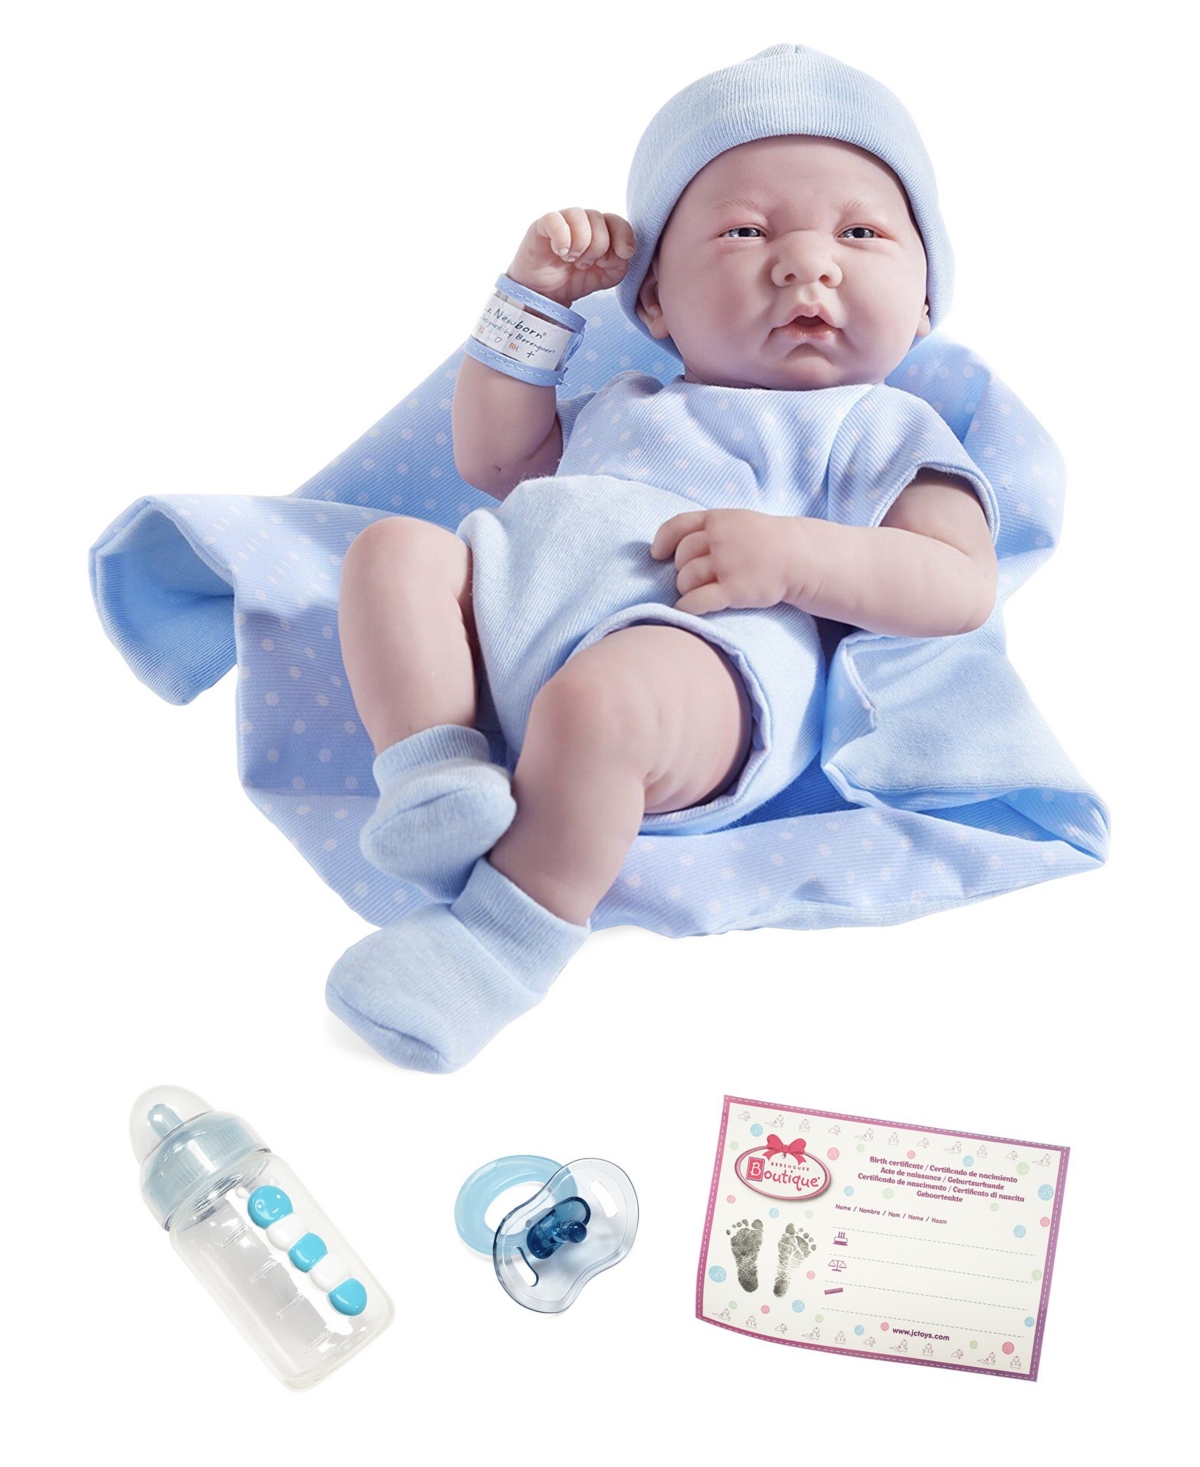 Jc Toys La Newborn14 " Real Boy Baby Doll Blue Outfit